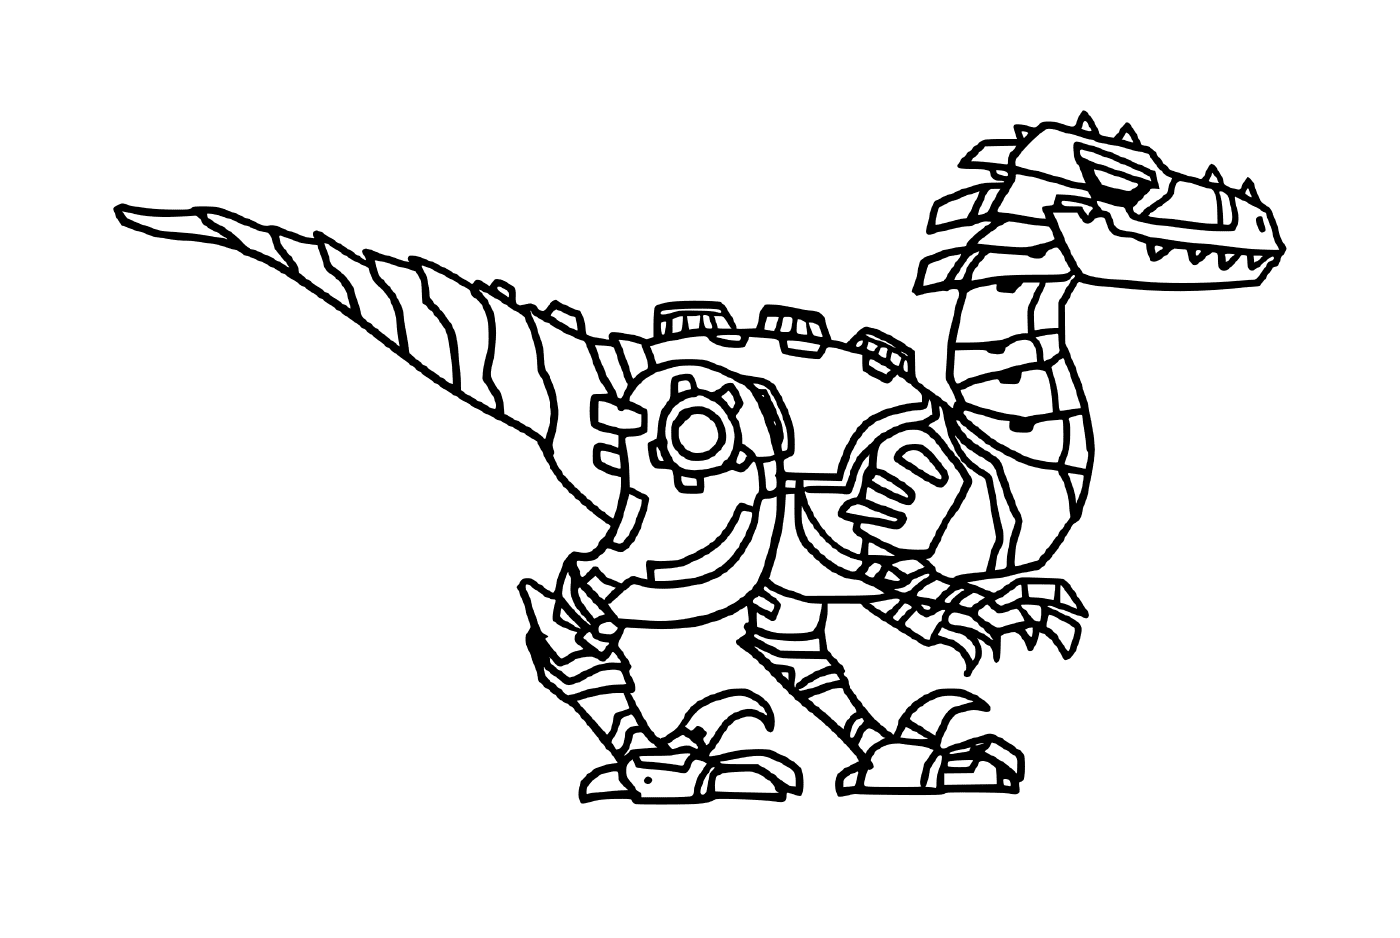  Tyranosaur, dinosaur robot 